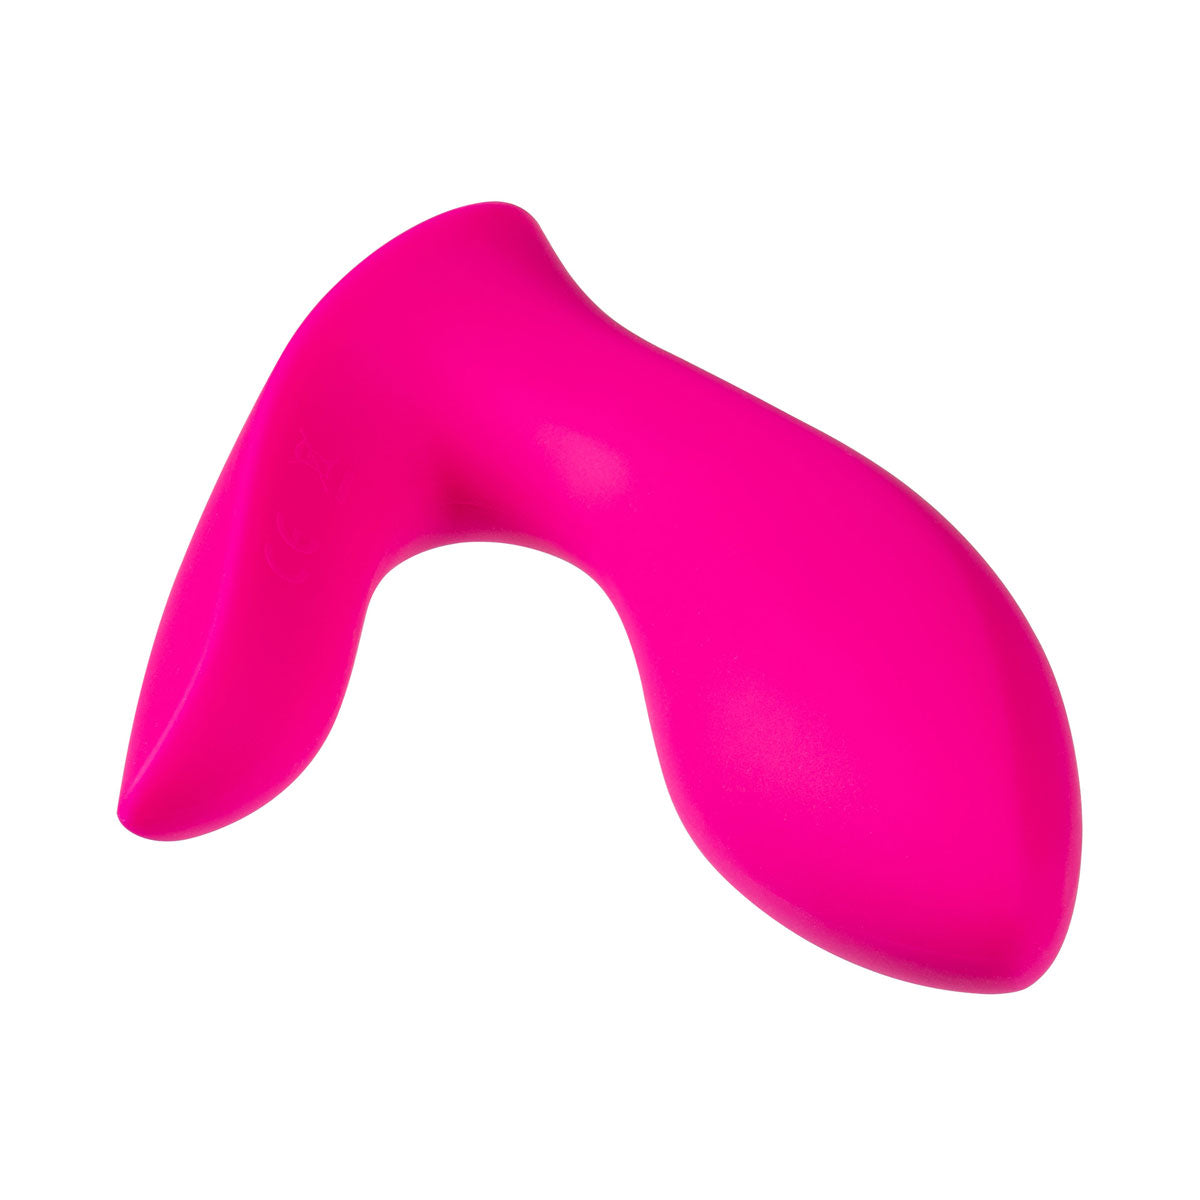 Lovense - Flexer - Bluetooth® Insertable Dual Panty Vibrator – Pink